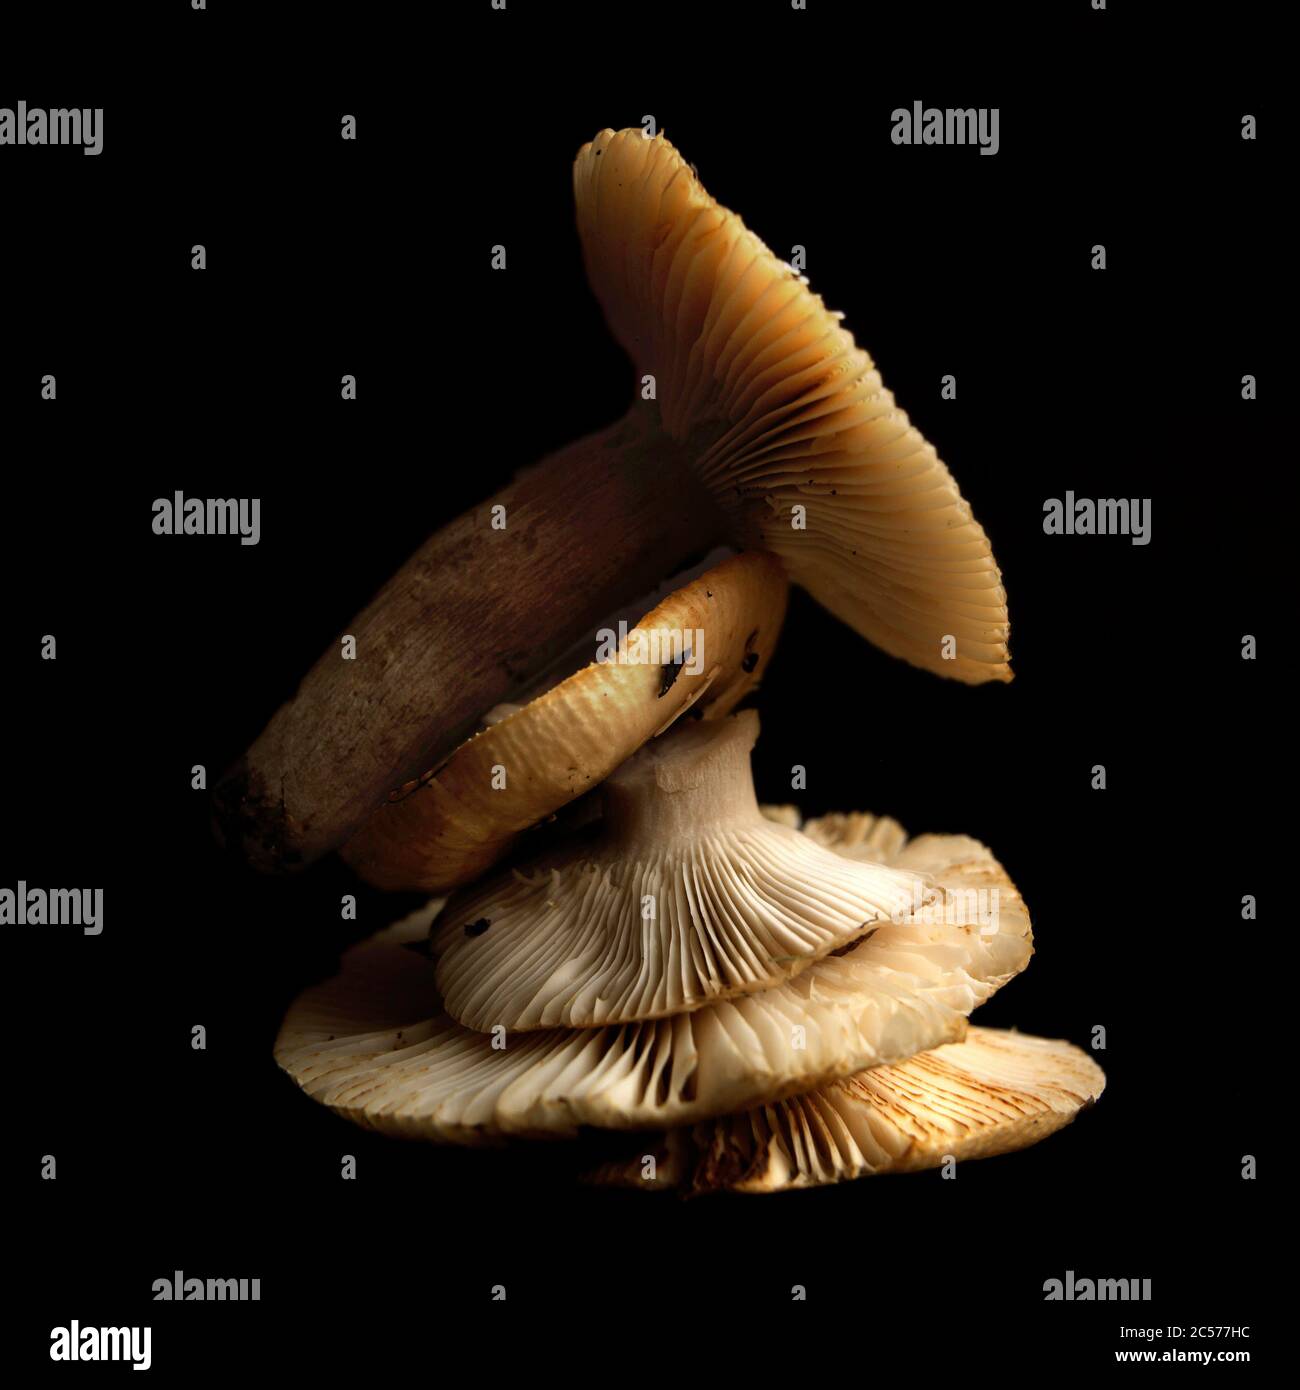 Mushrooms on a black background Stock Photo